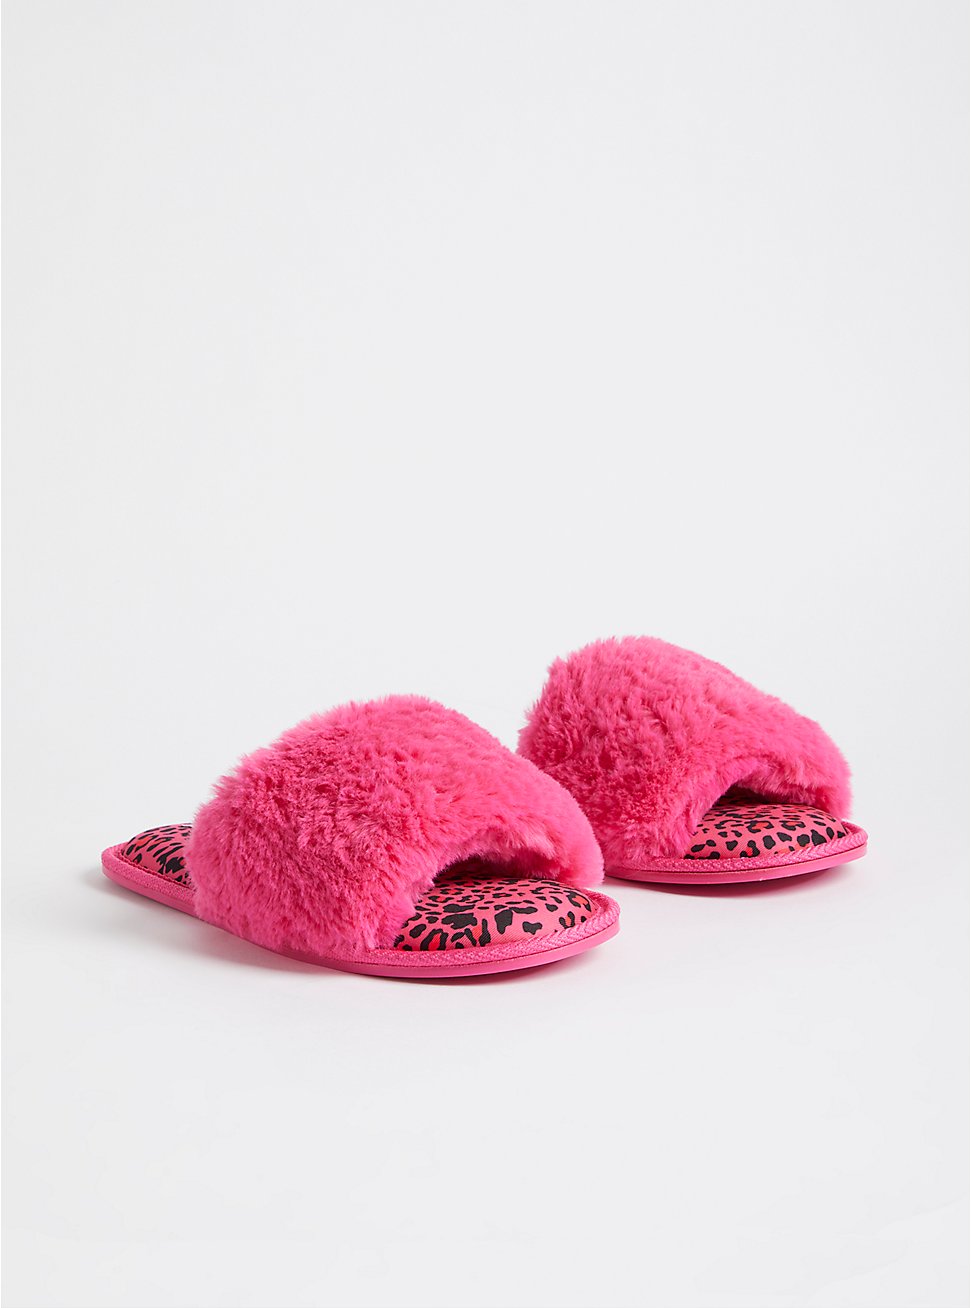 Fur Band Slipper - Leopard Pink (WW), LEOPARD, hi-res